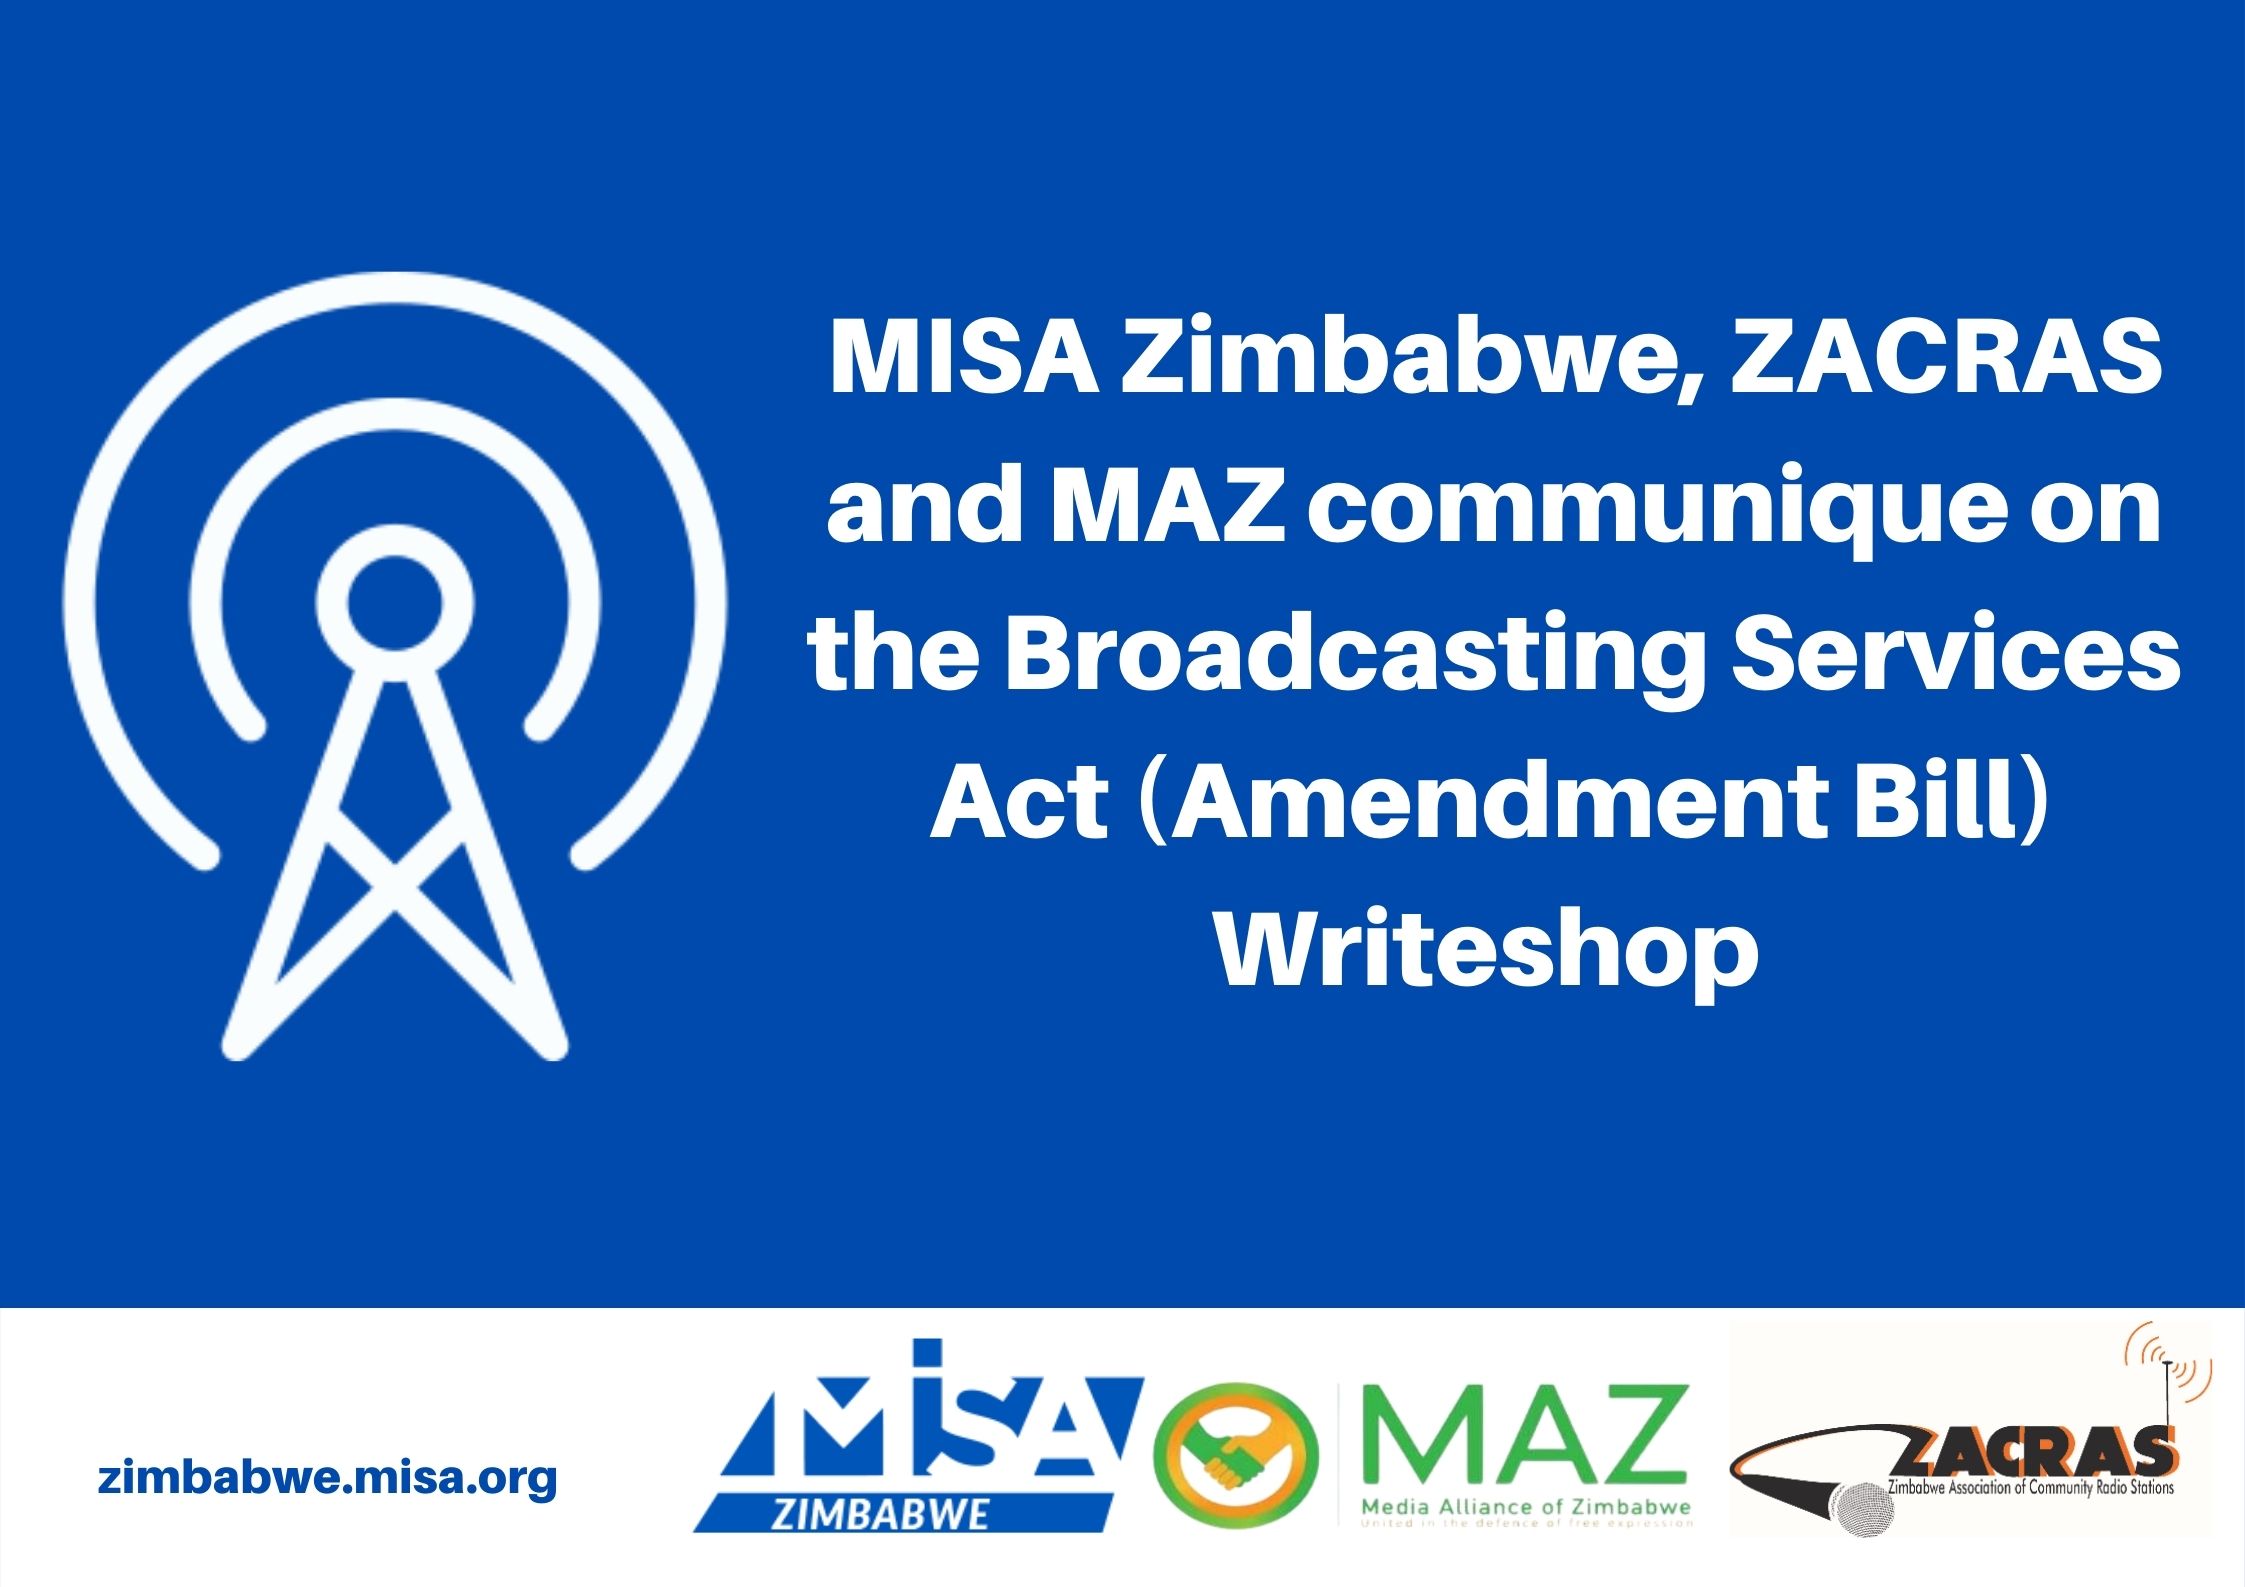 MISA Zimbabwe, ZACRAS and MAZ communique on the Broadcasting Services Act (Amendment Bill) Writeshop 